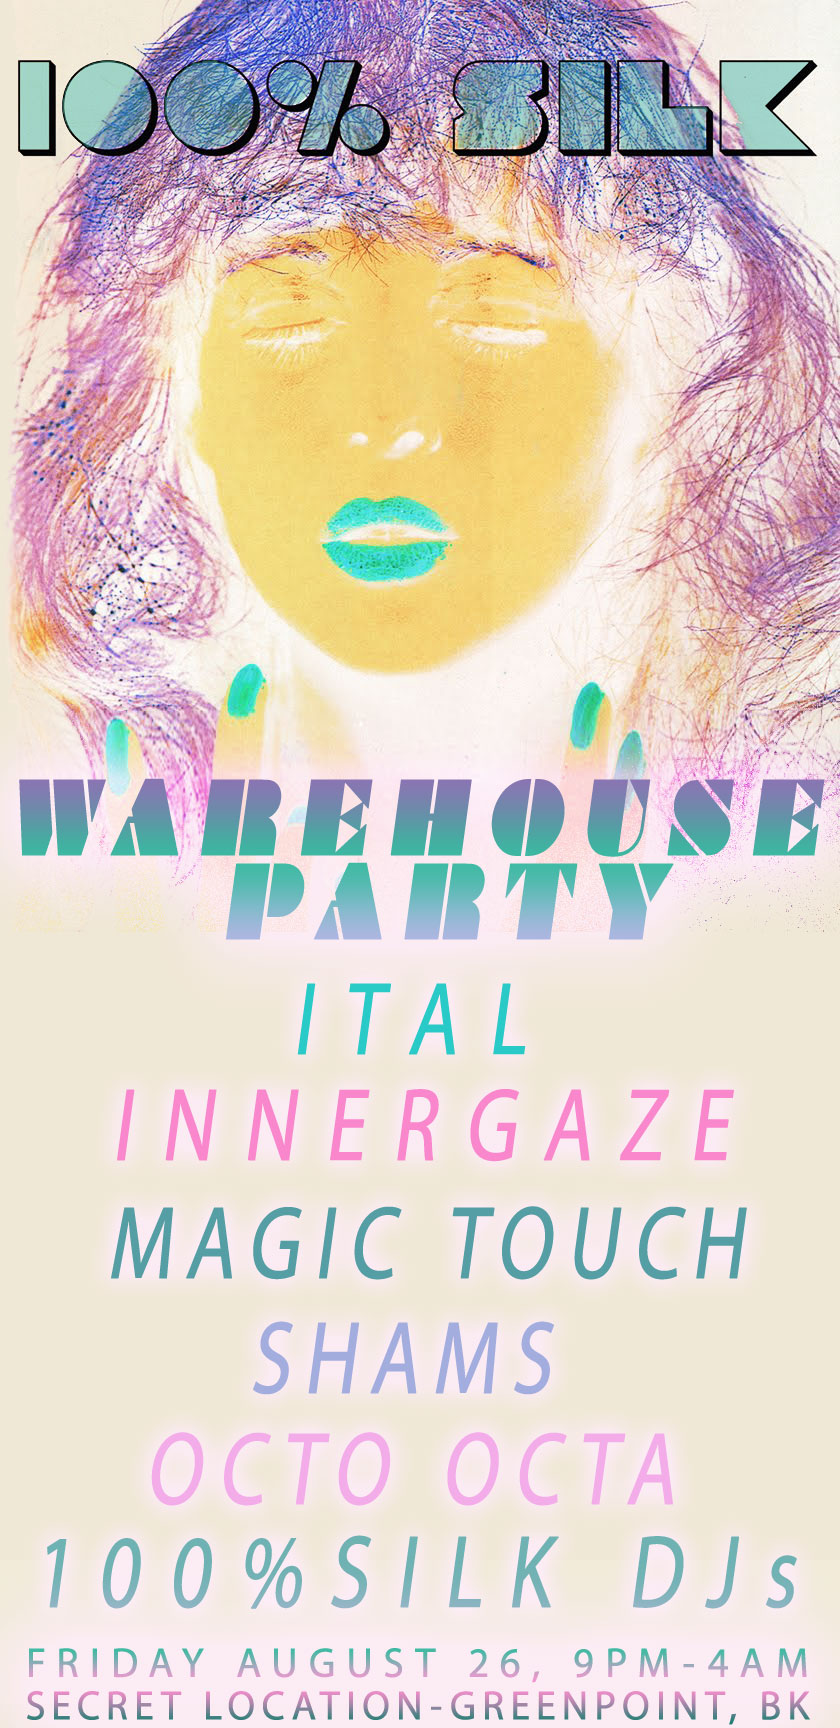    100% Silk Warehouse Party: Ital, Innergaze, Magic Touch, Shams, Octo Octa   August 2011 